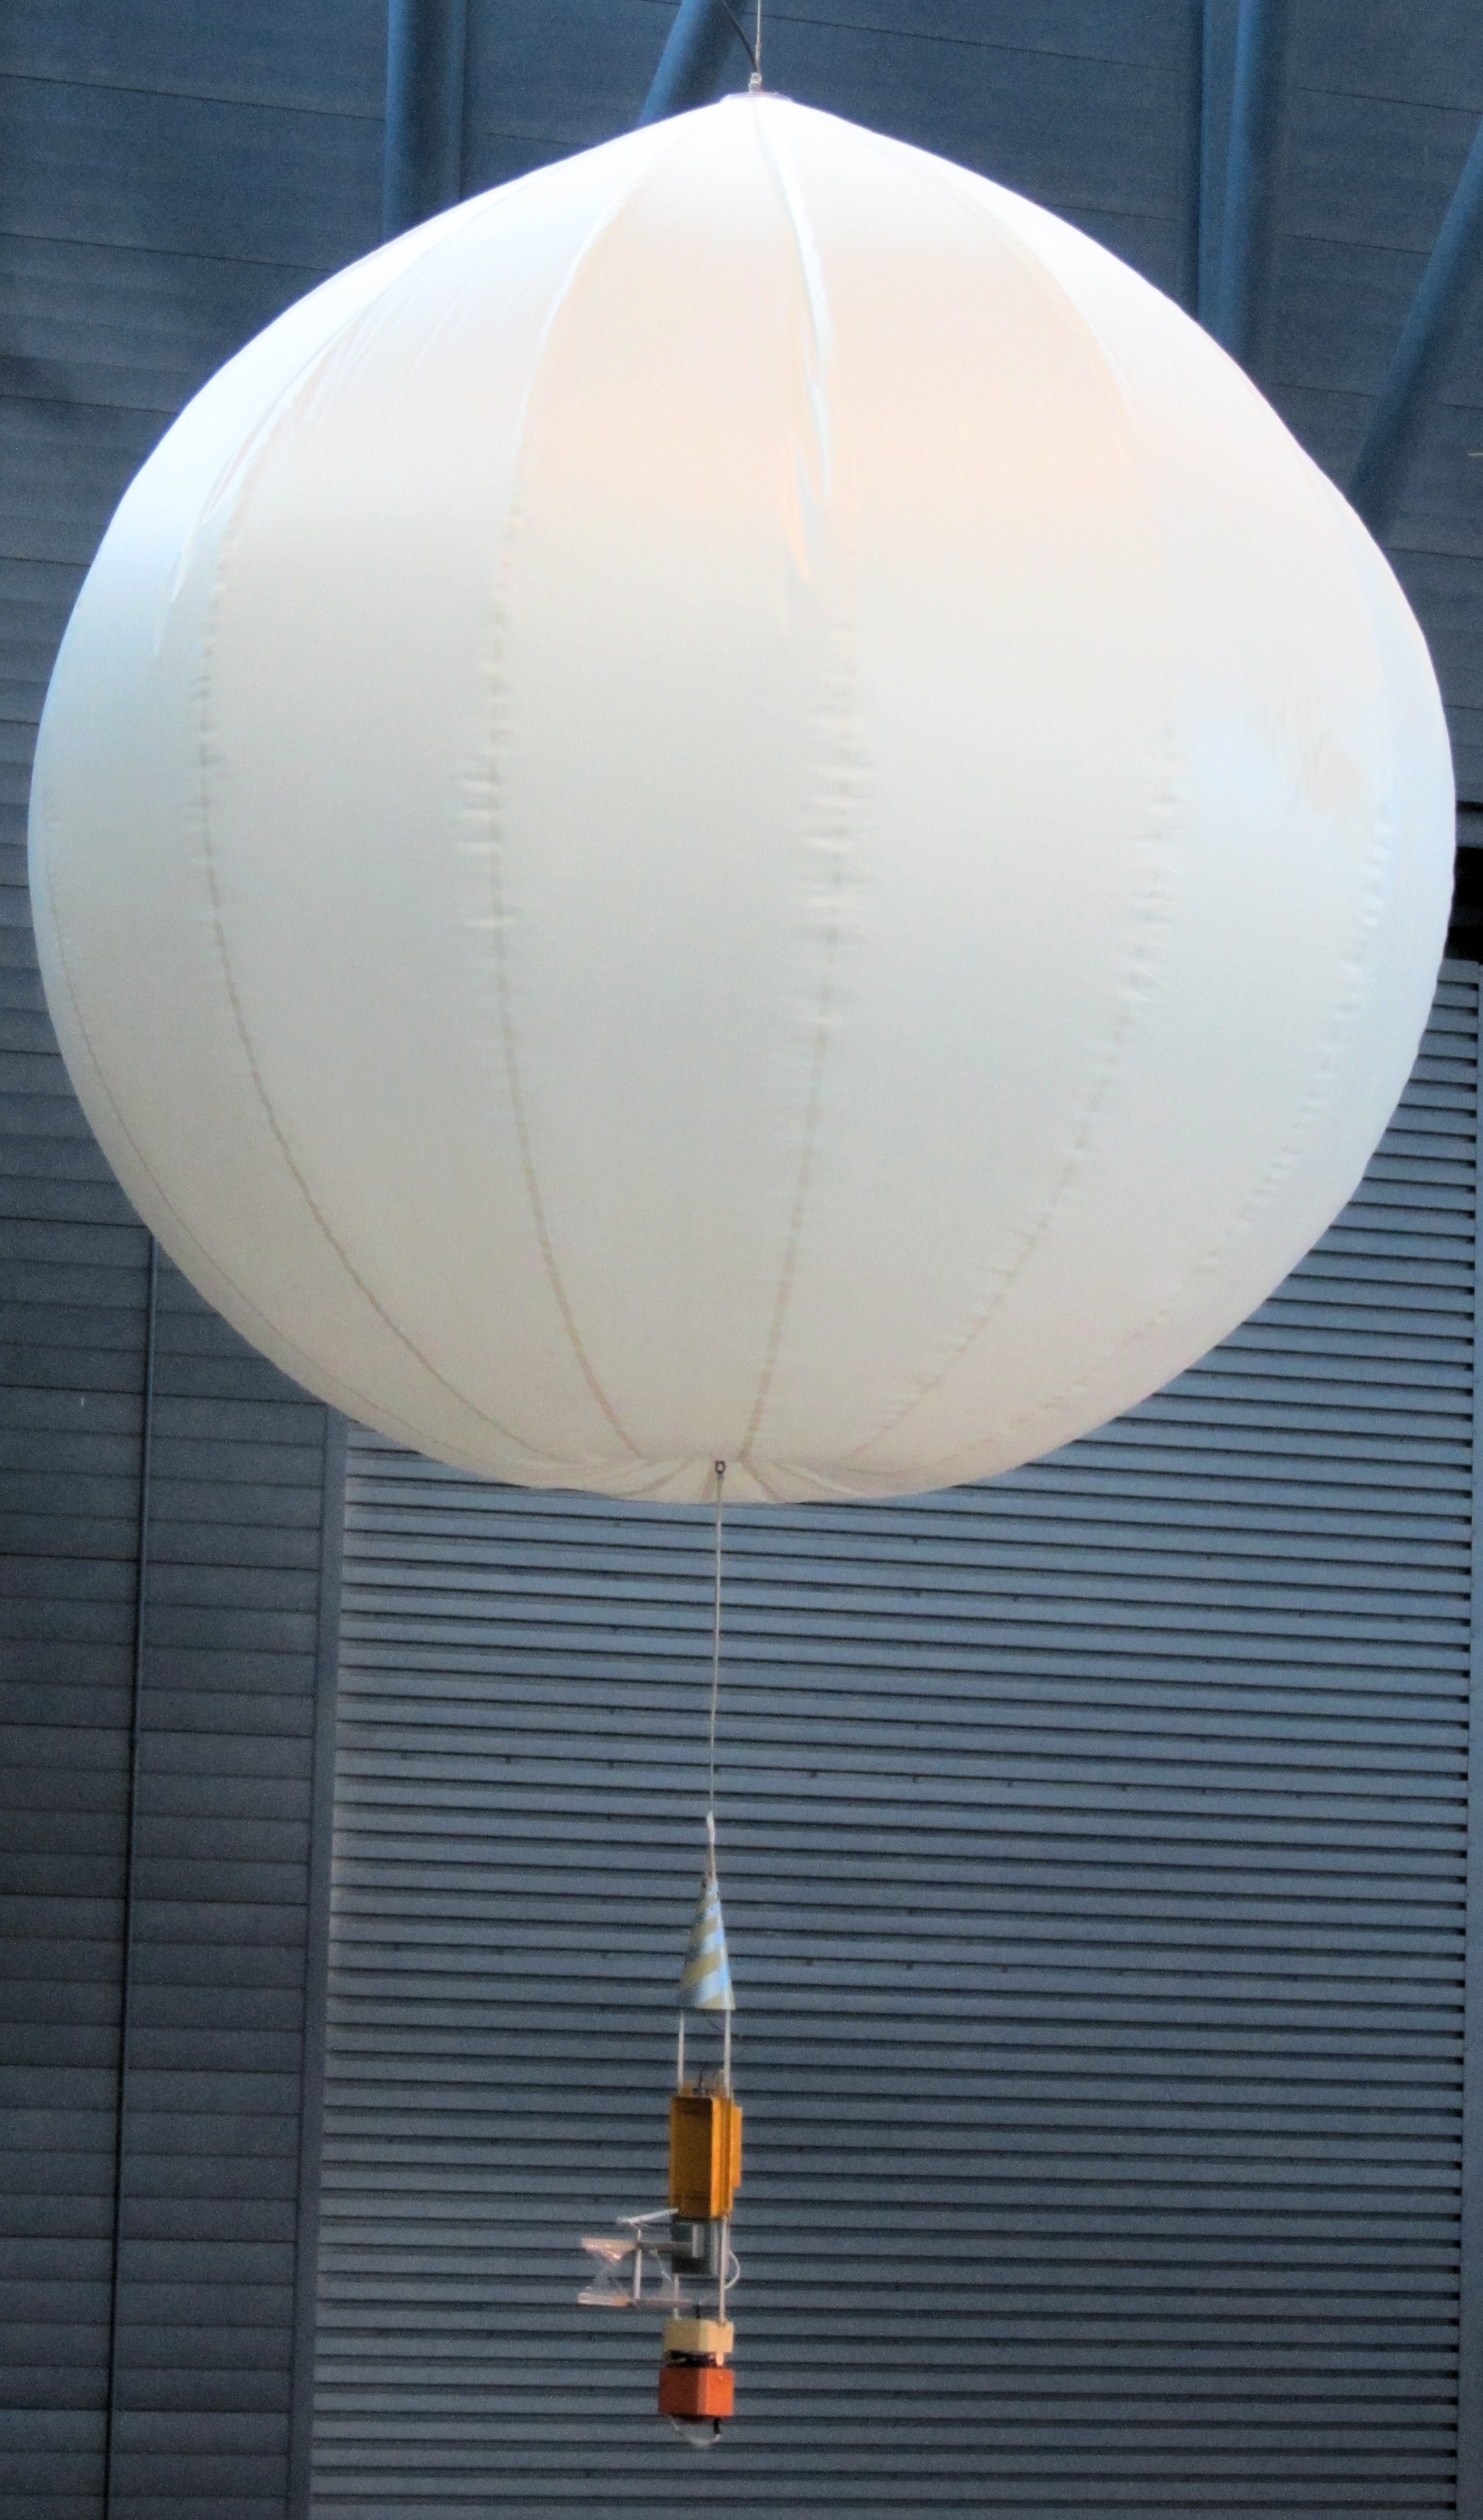 Russian_%22Vega%22_balloon_mission_to_Venus_on_display_at_the_Udvar-Hazy_museum.jpg